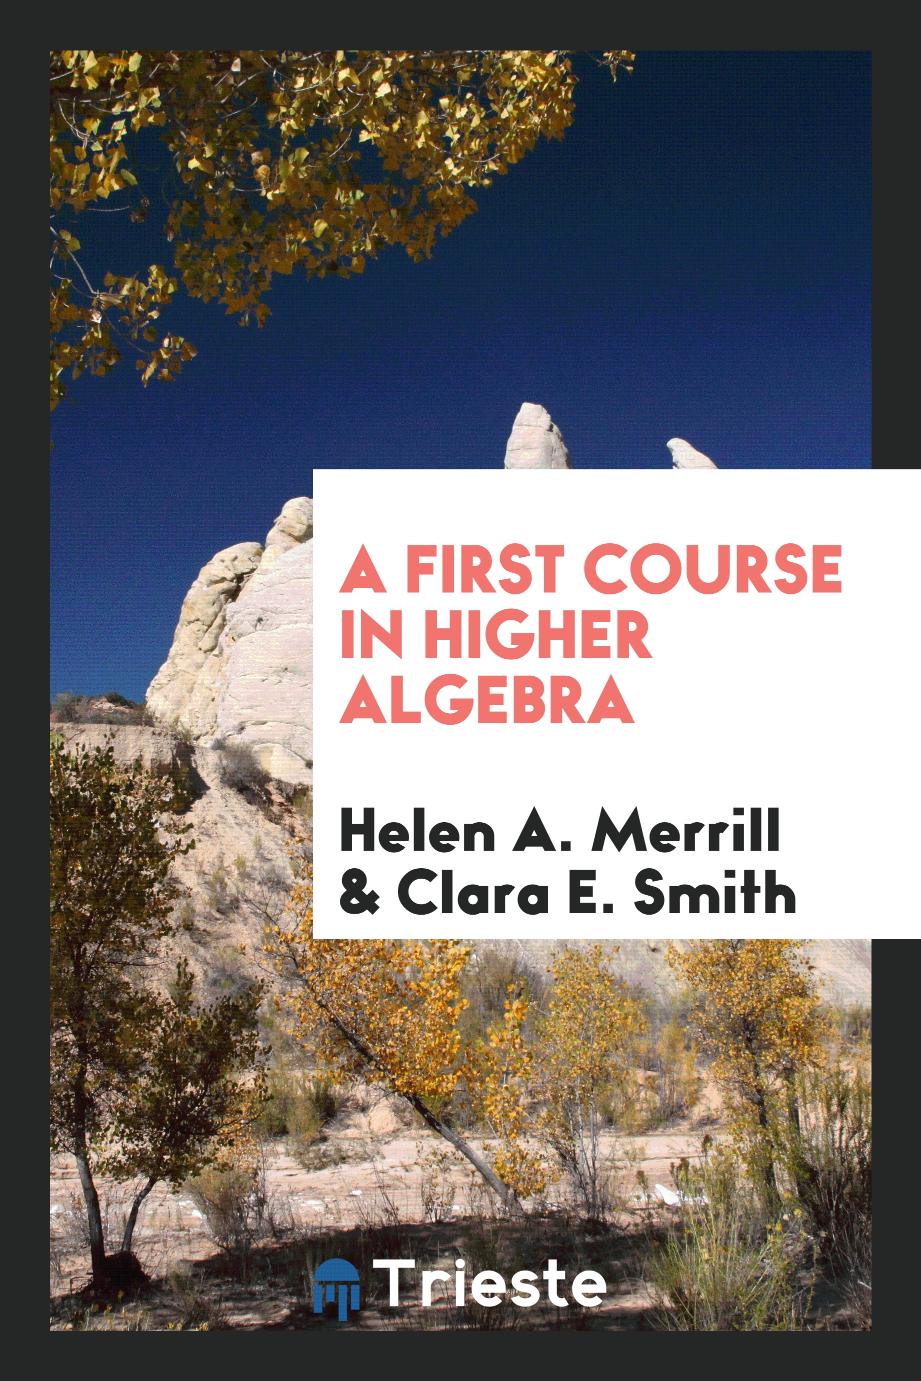 A first course in higher algebra